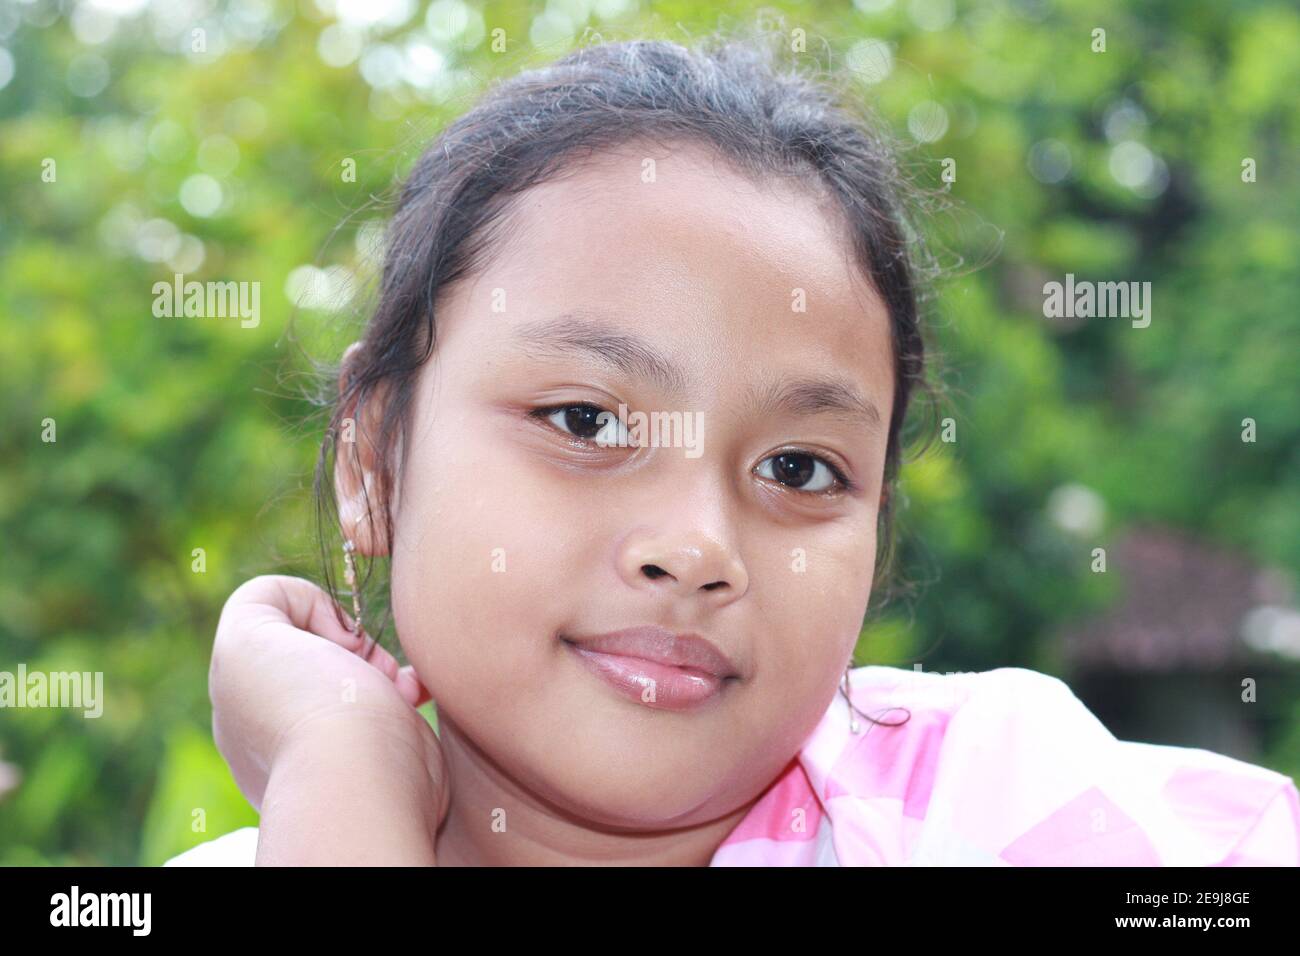 Smiling Asian little girl Stock Photo - Alamy